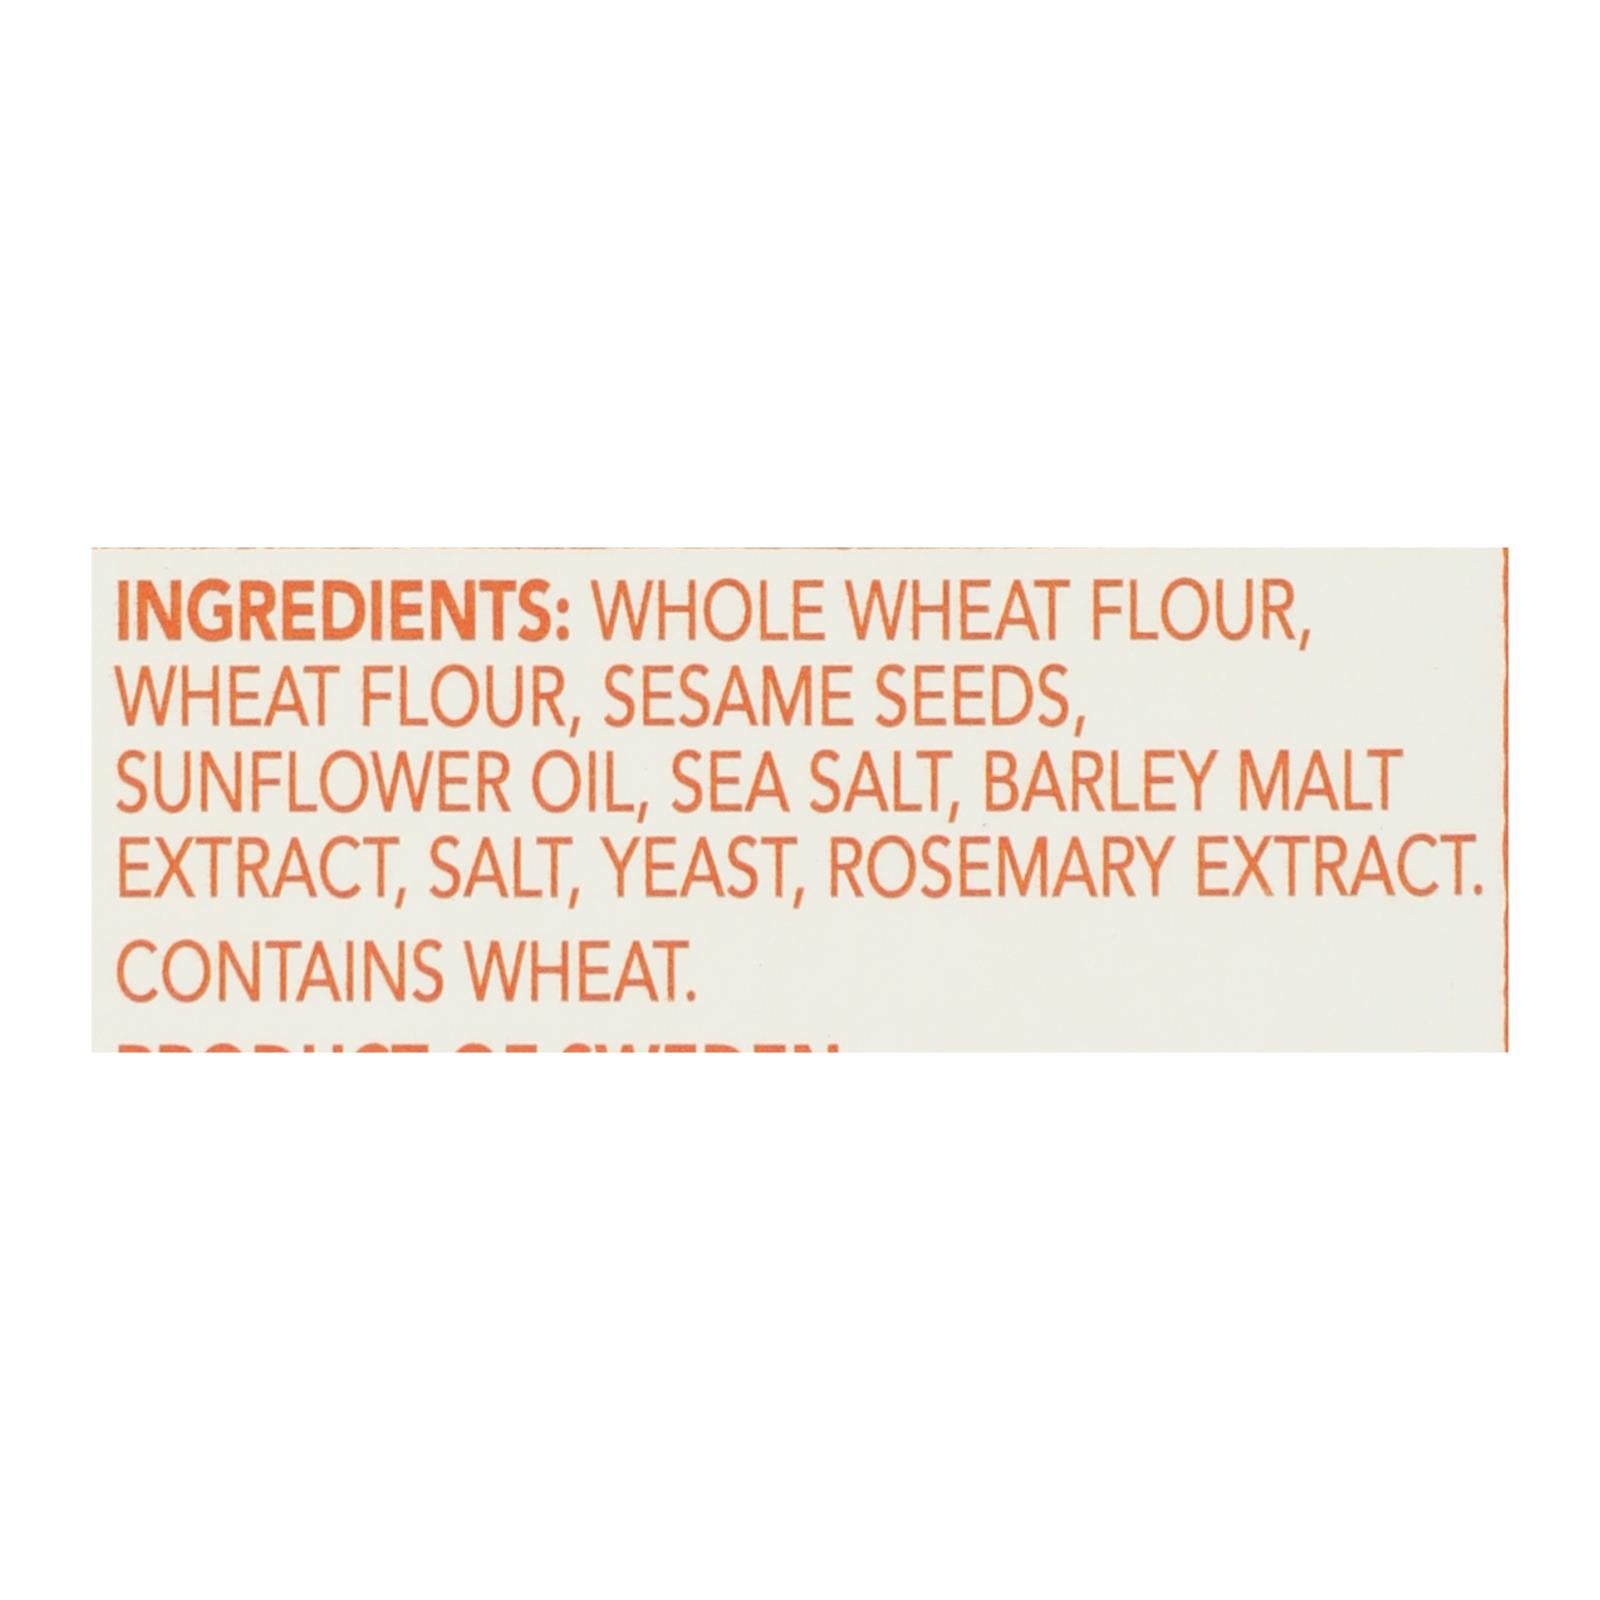 Wasa Sesame & Sea Salt Flatbread Thins  - Case Of 10 - 6.7 Oz